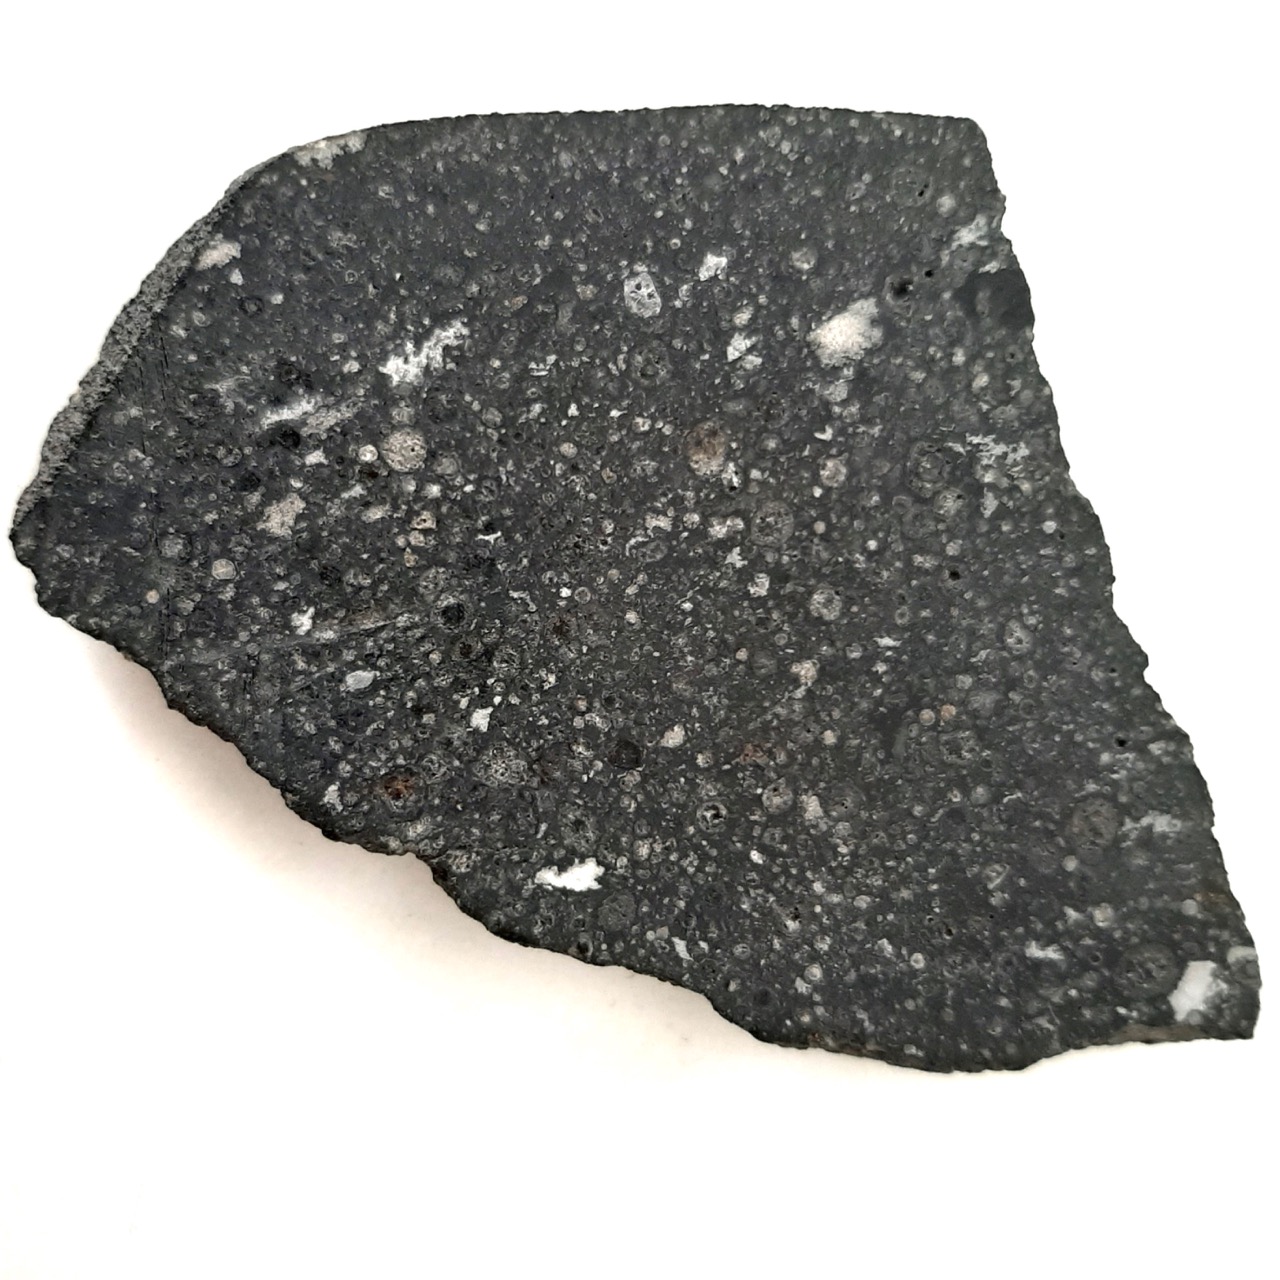 Allende meteorite. CV3 chondrite. Endcut.